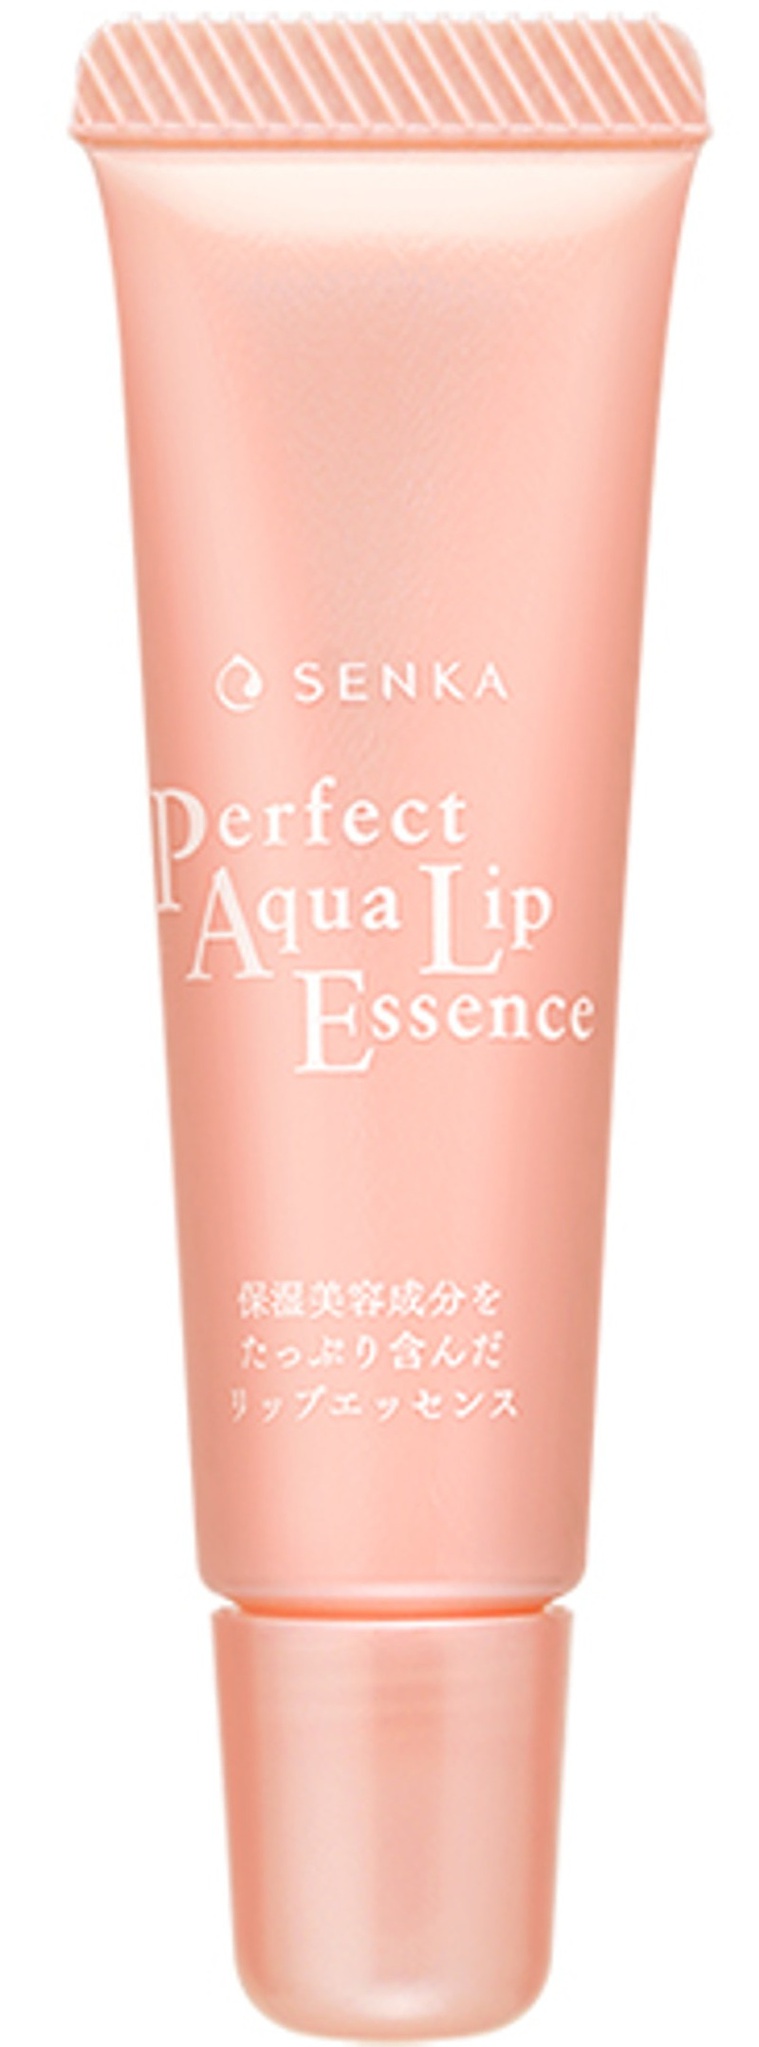 Senka Perfect Aqua Lip Essence